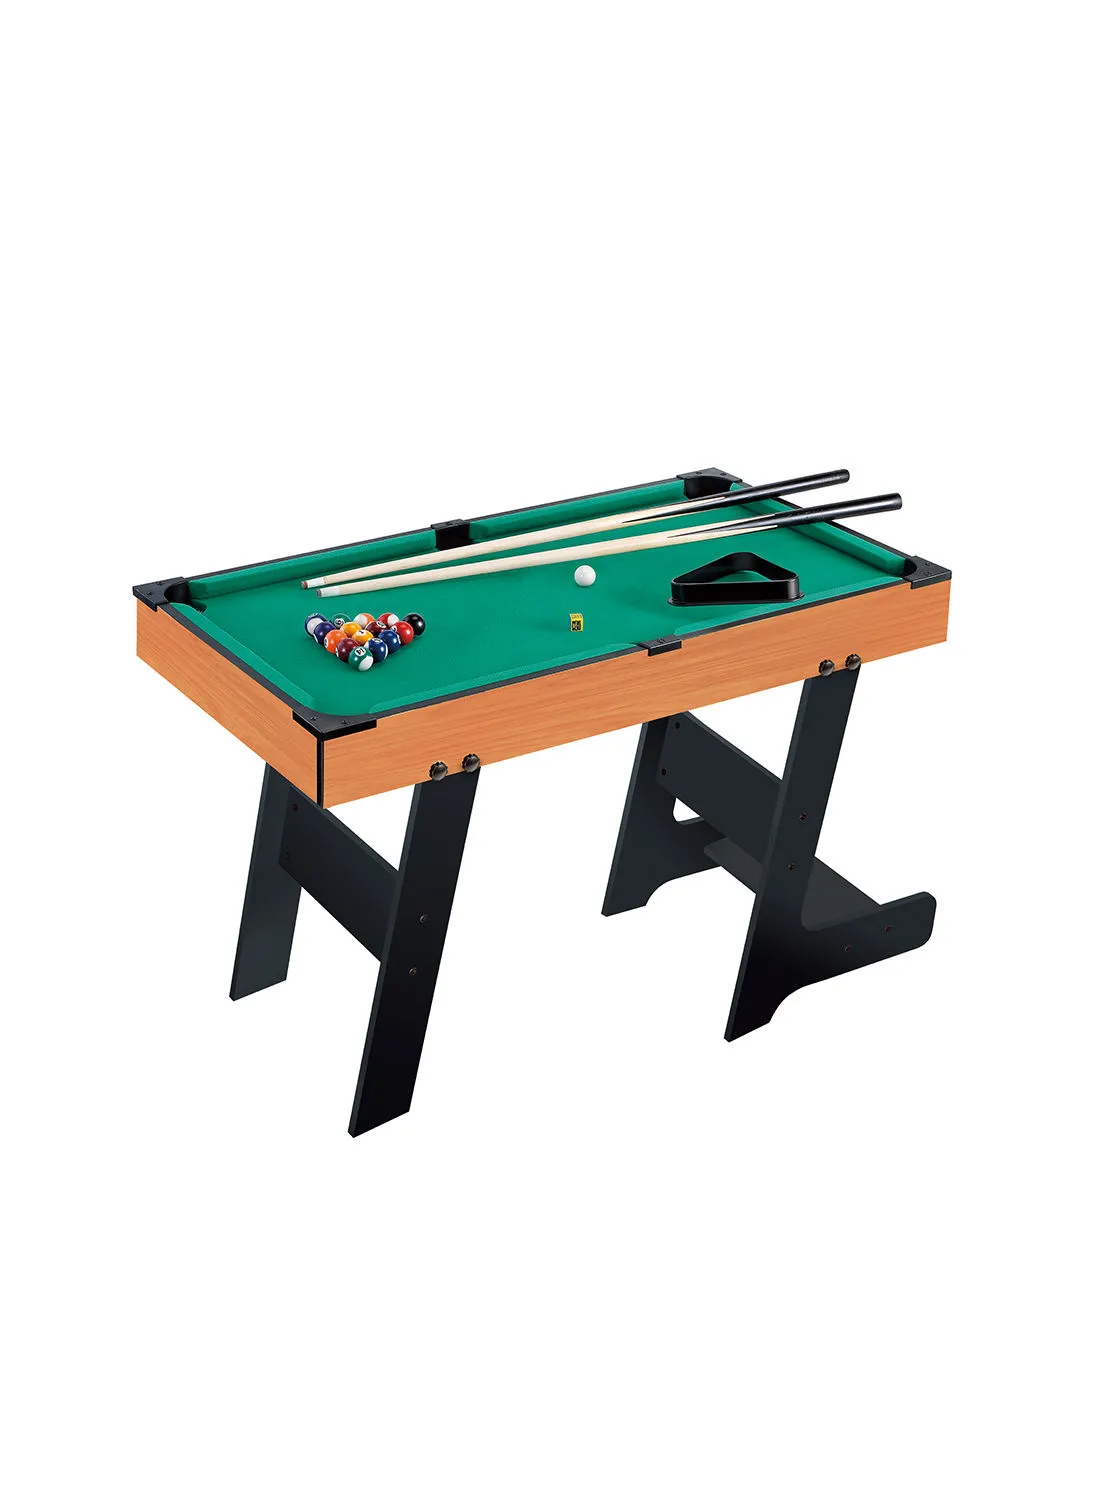 XIANGJUN Billiards Pool Table Game Set 122 x 62.5 x 76cm